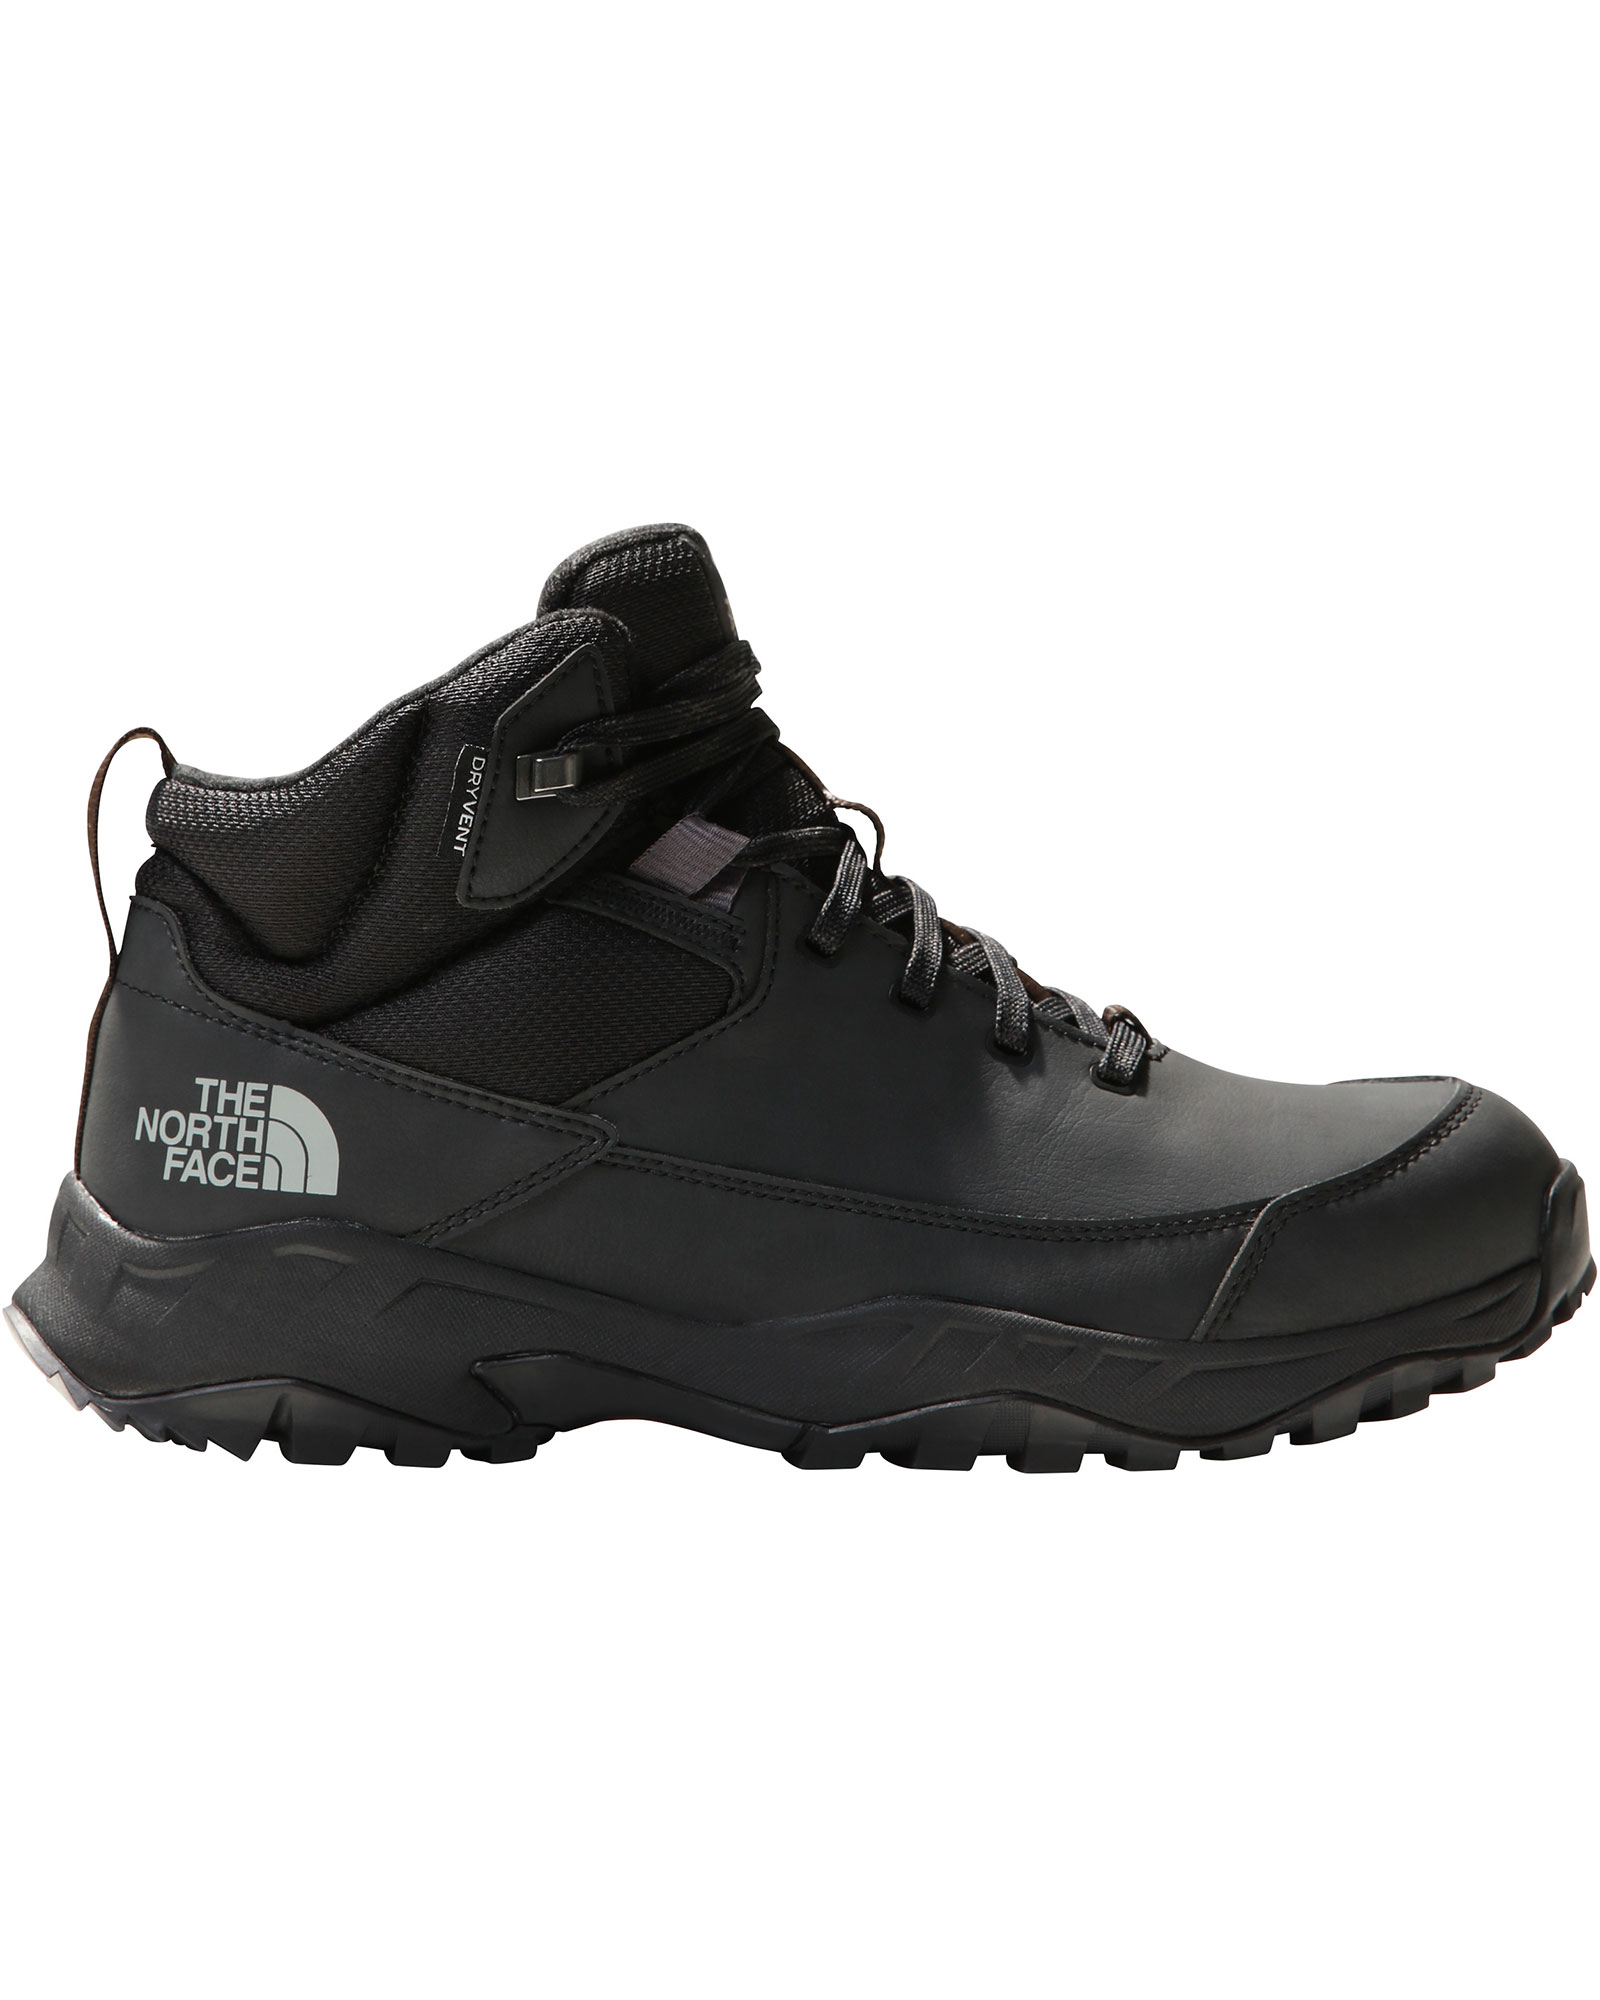 The North Face Storm Strike III Waterproof Men’s Boots - TNF Black/Asphalt Grey UK 13